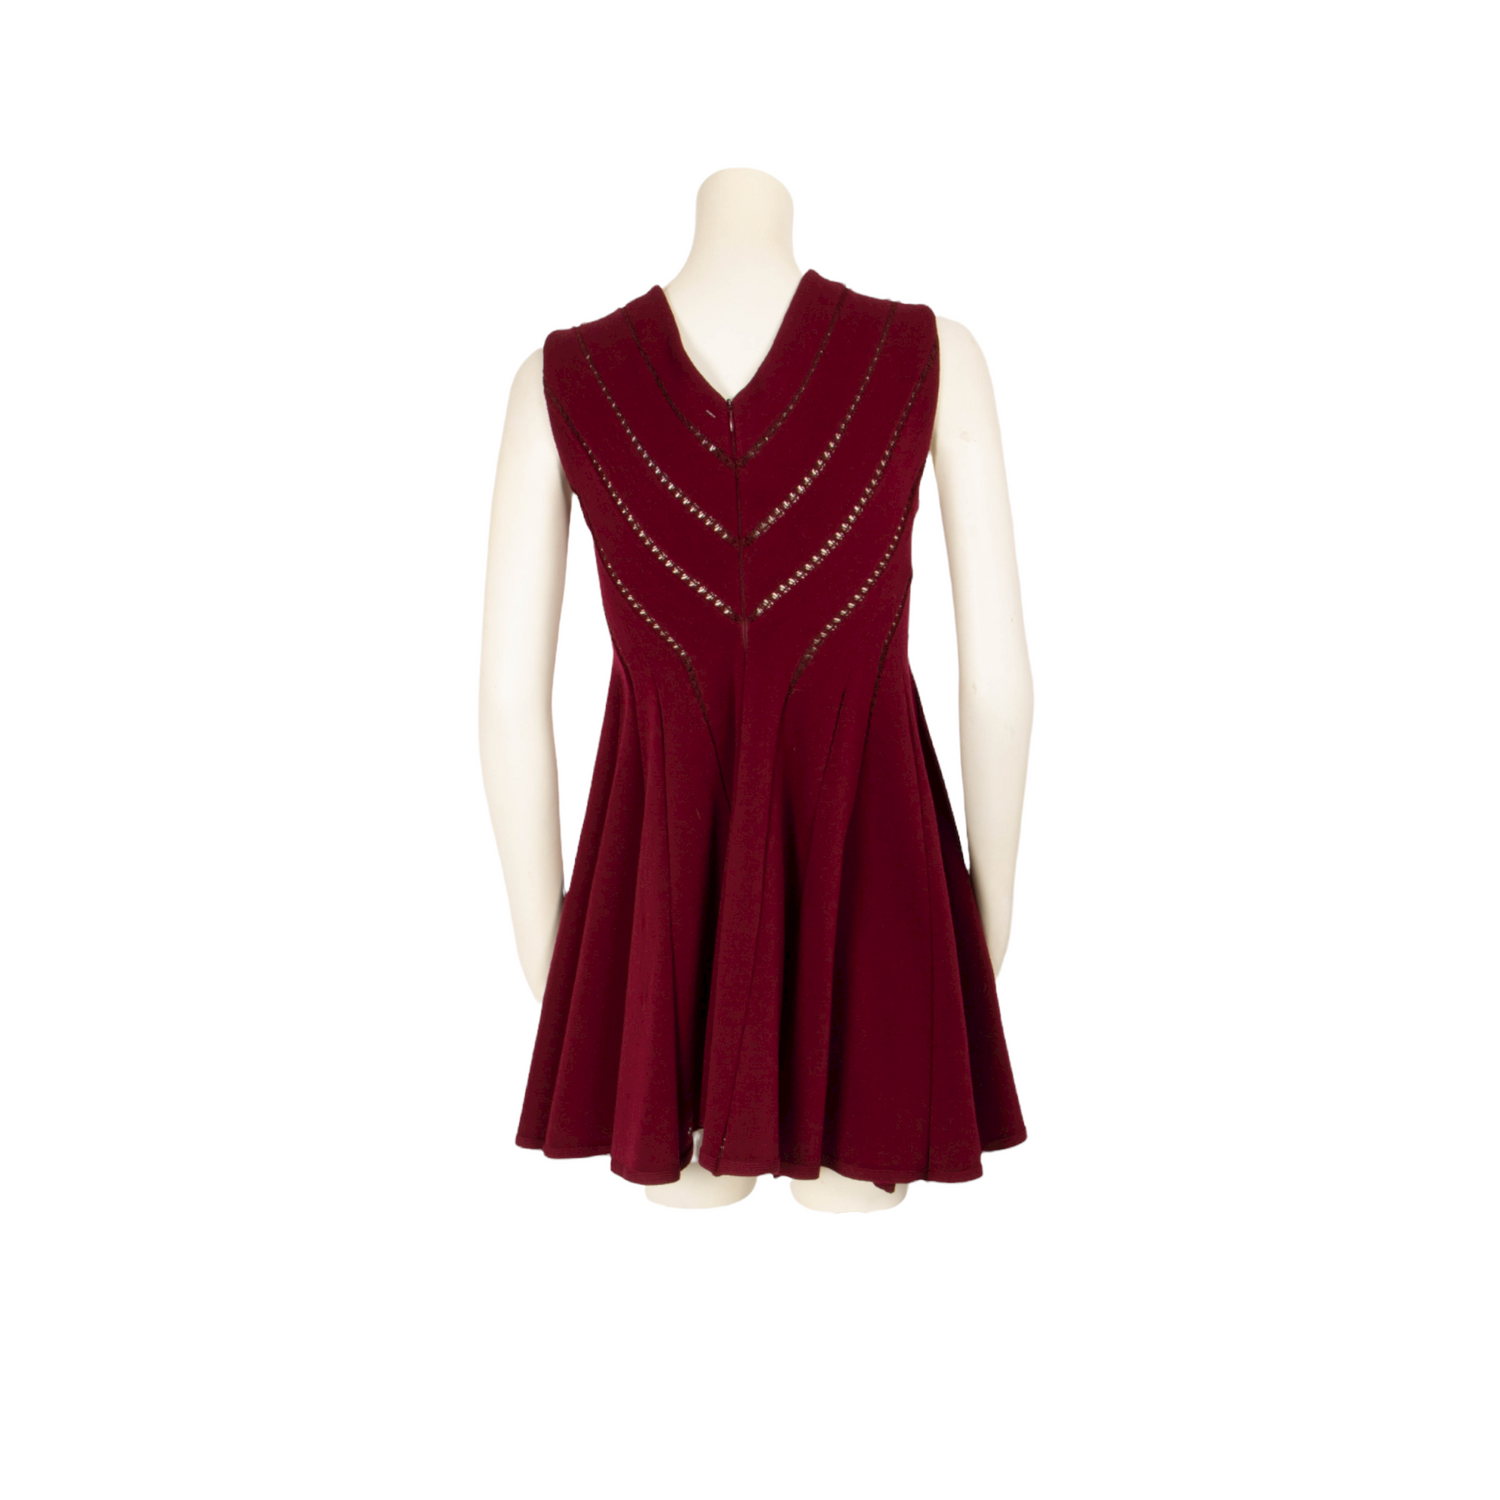 Alaïa vintage burgundy dress - S - 2000s